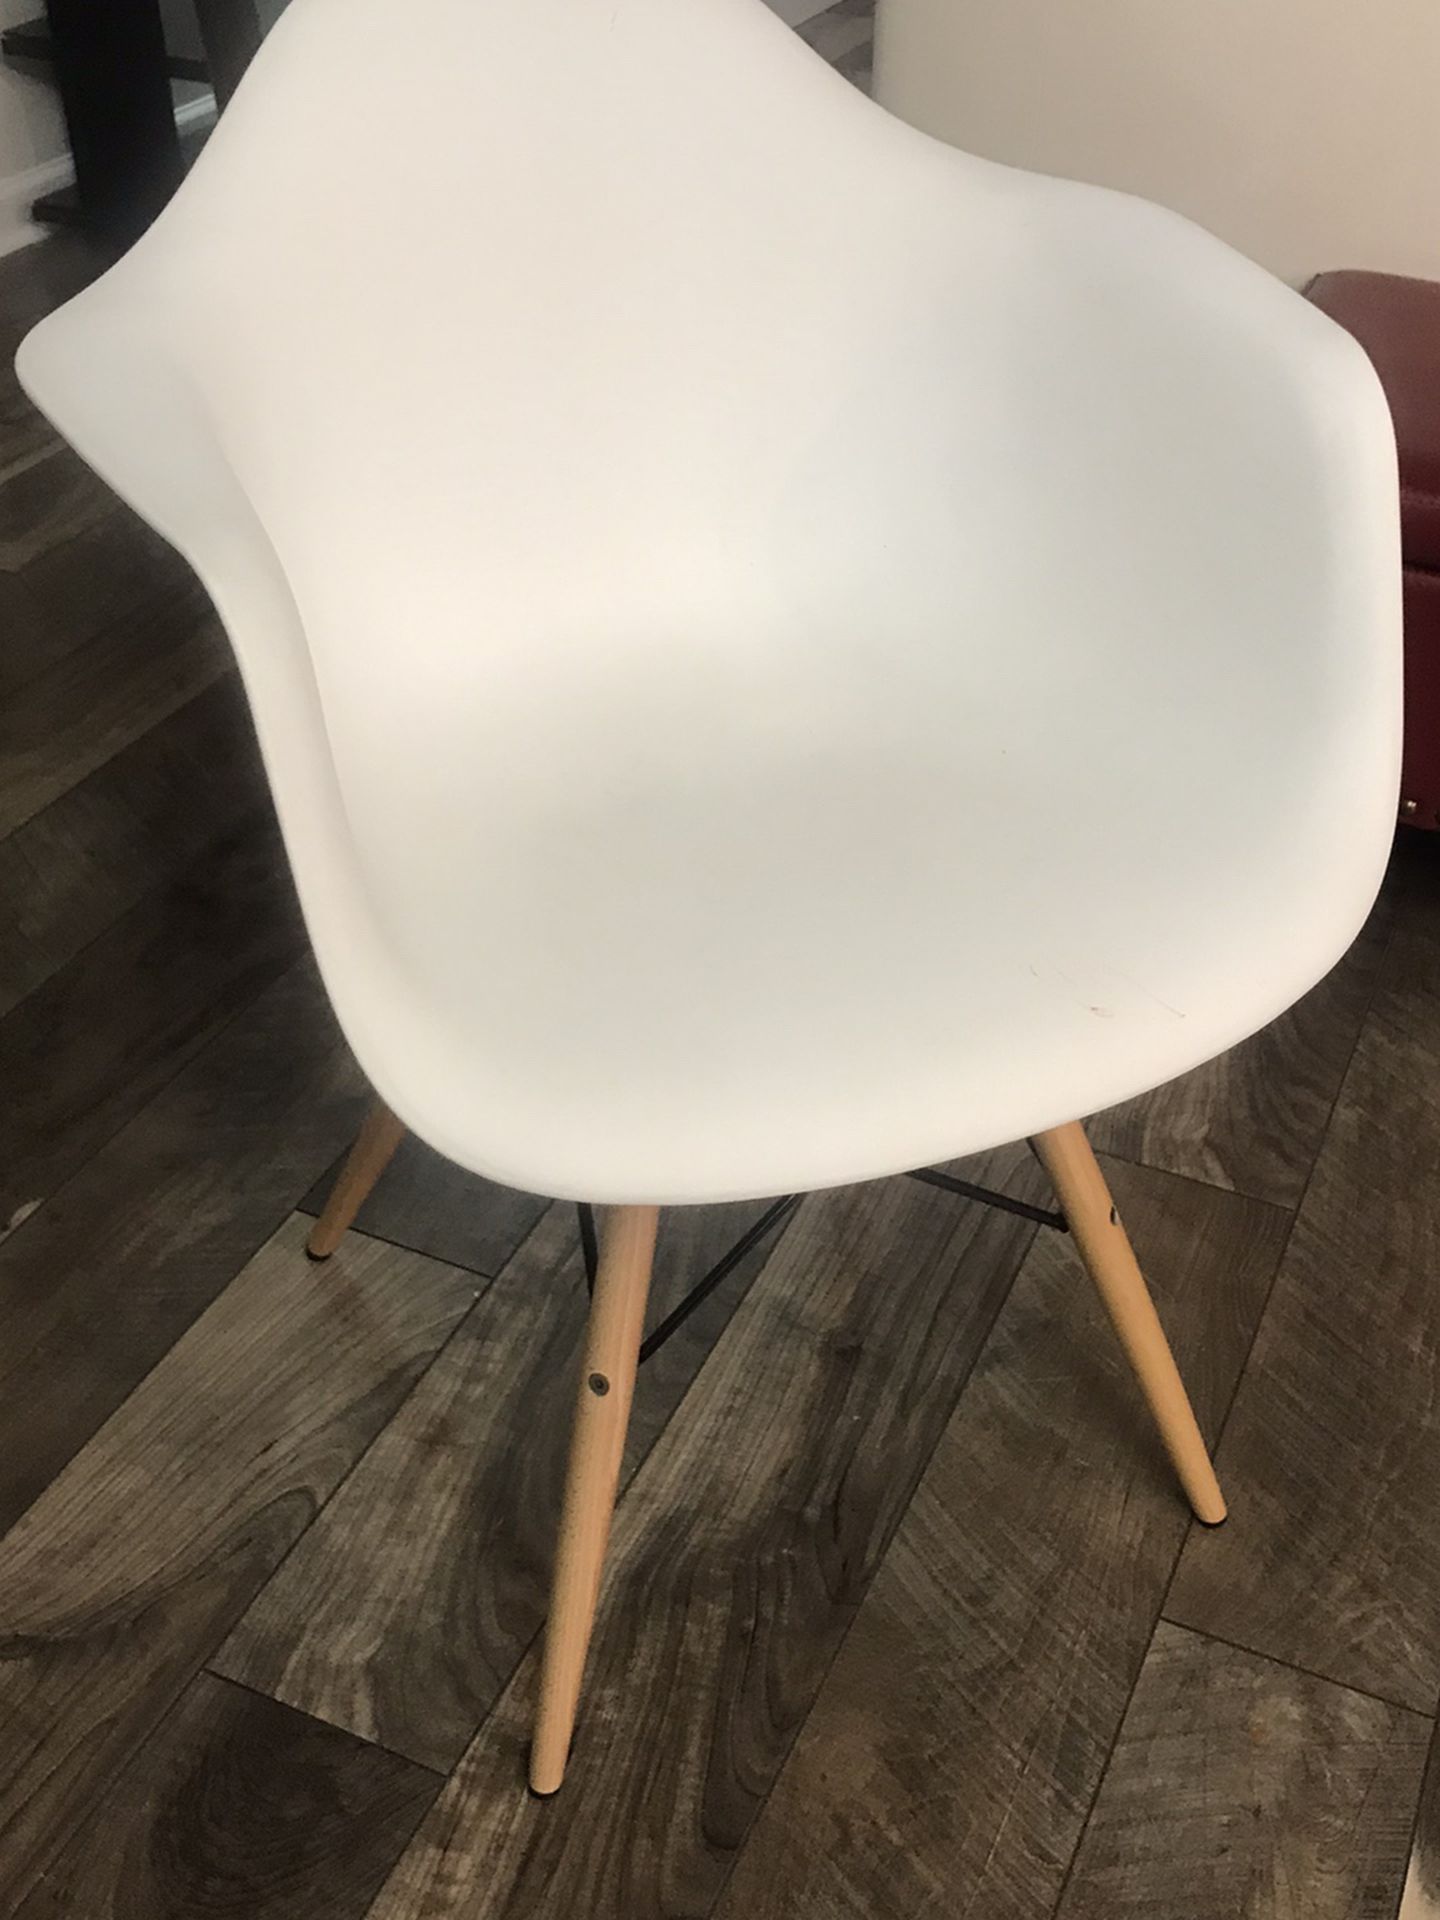 IKEA Plastic Chair